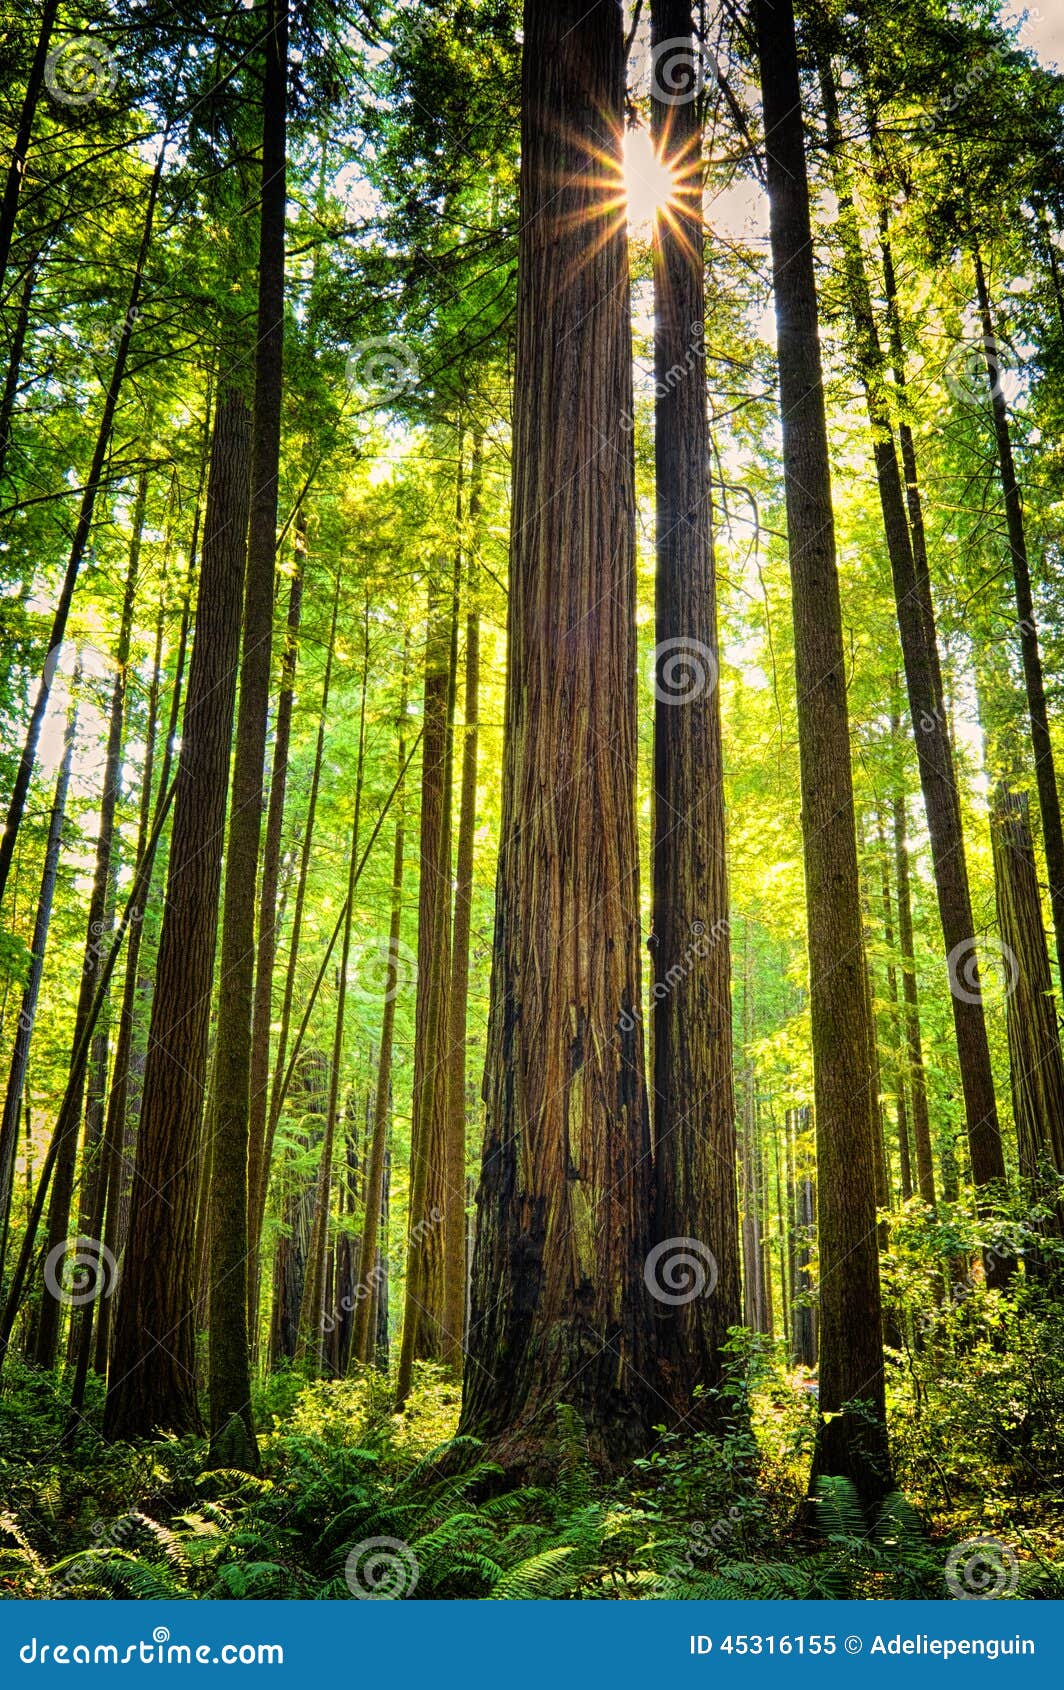 giant redwood trees, california